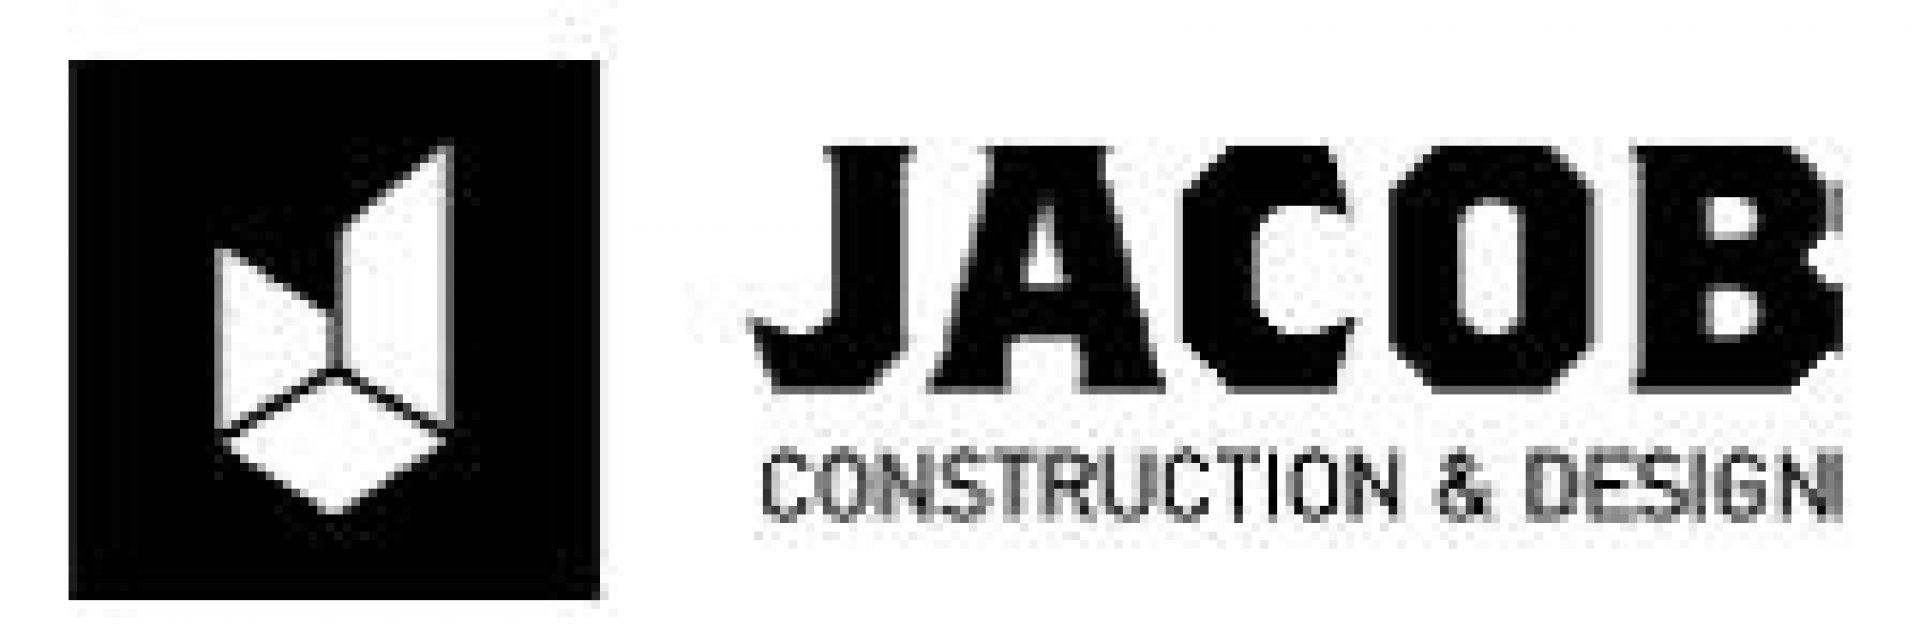 Jacob Construction & Design Inc.